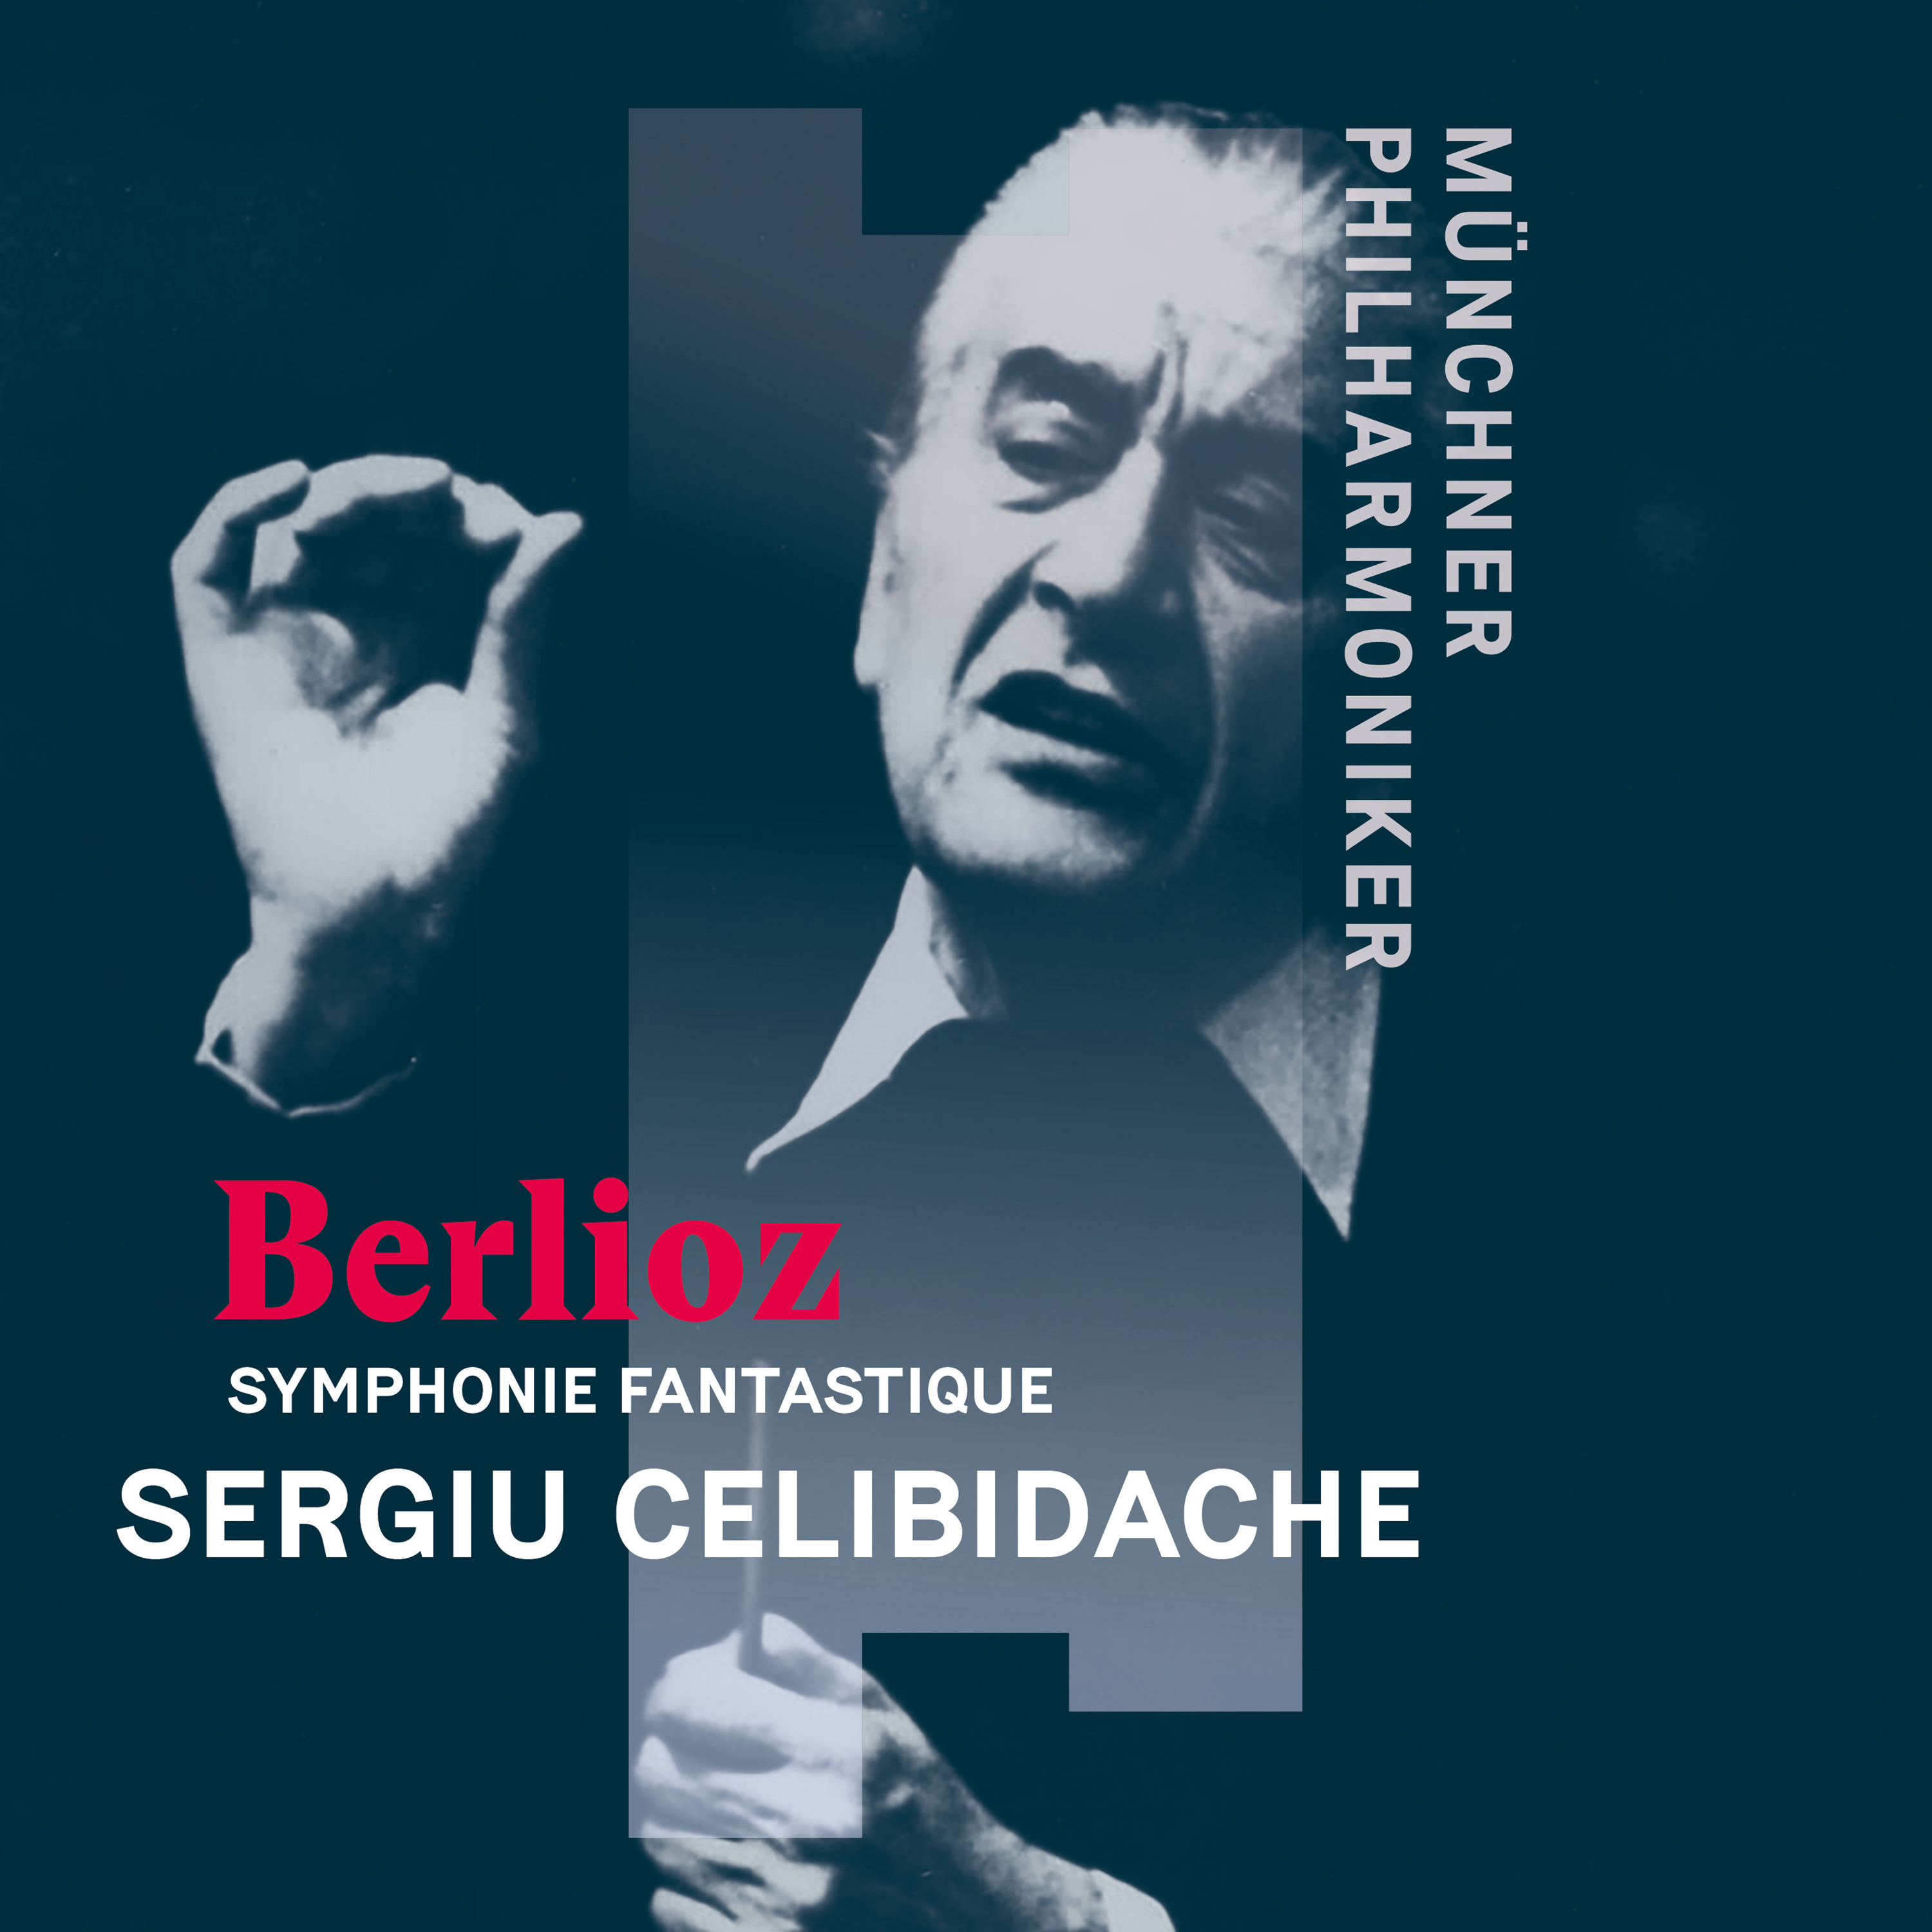 Munchner Philharmoniker, Sergiu Celibidache – Berlioz Symphonie fantastique, H. 48, Op. 14 (2020) [FLAC 24bit/96kHz]